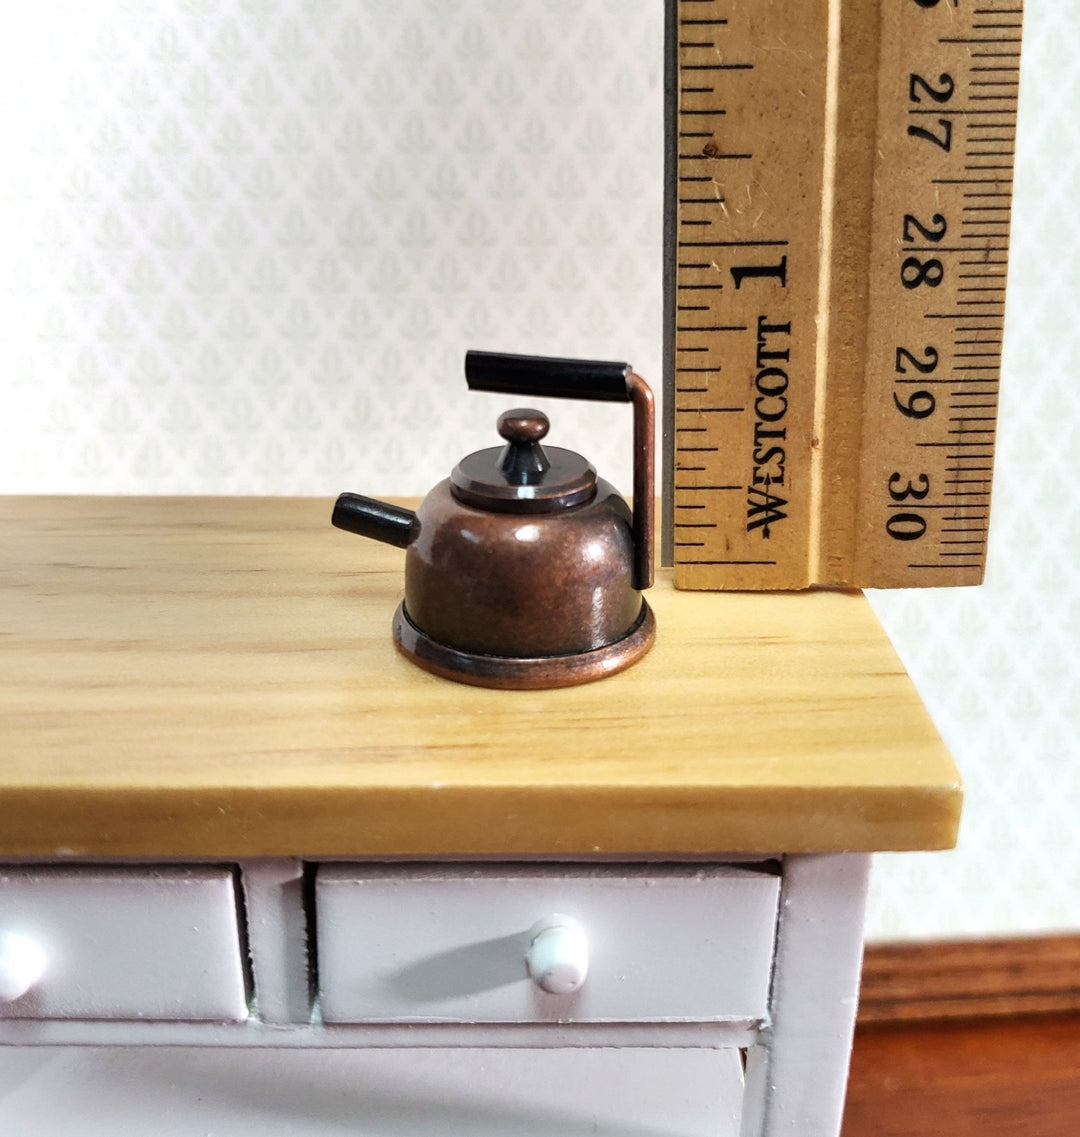 Dollhouse Miniature Teapot Kettle Antique Bronze Finish 1:12 Scale Kitchen Accessories - Miniature Crush